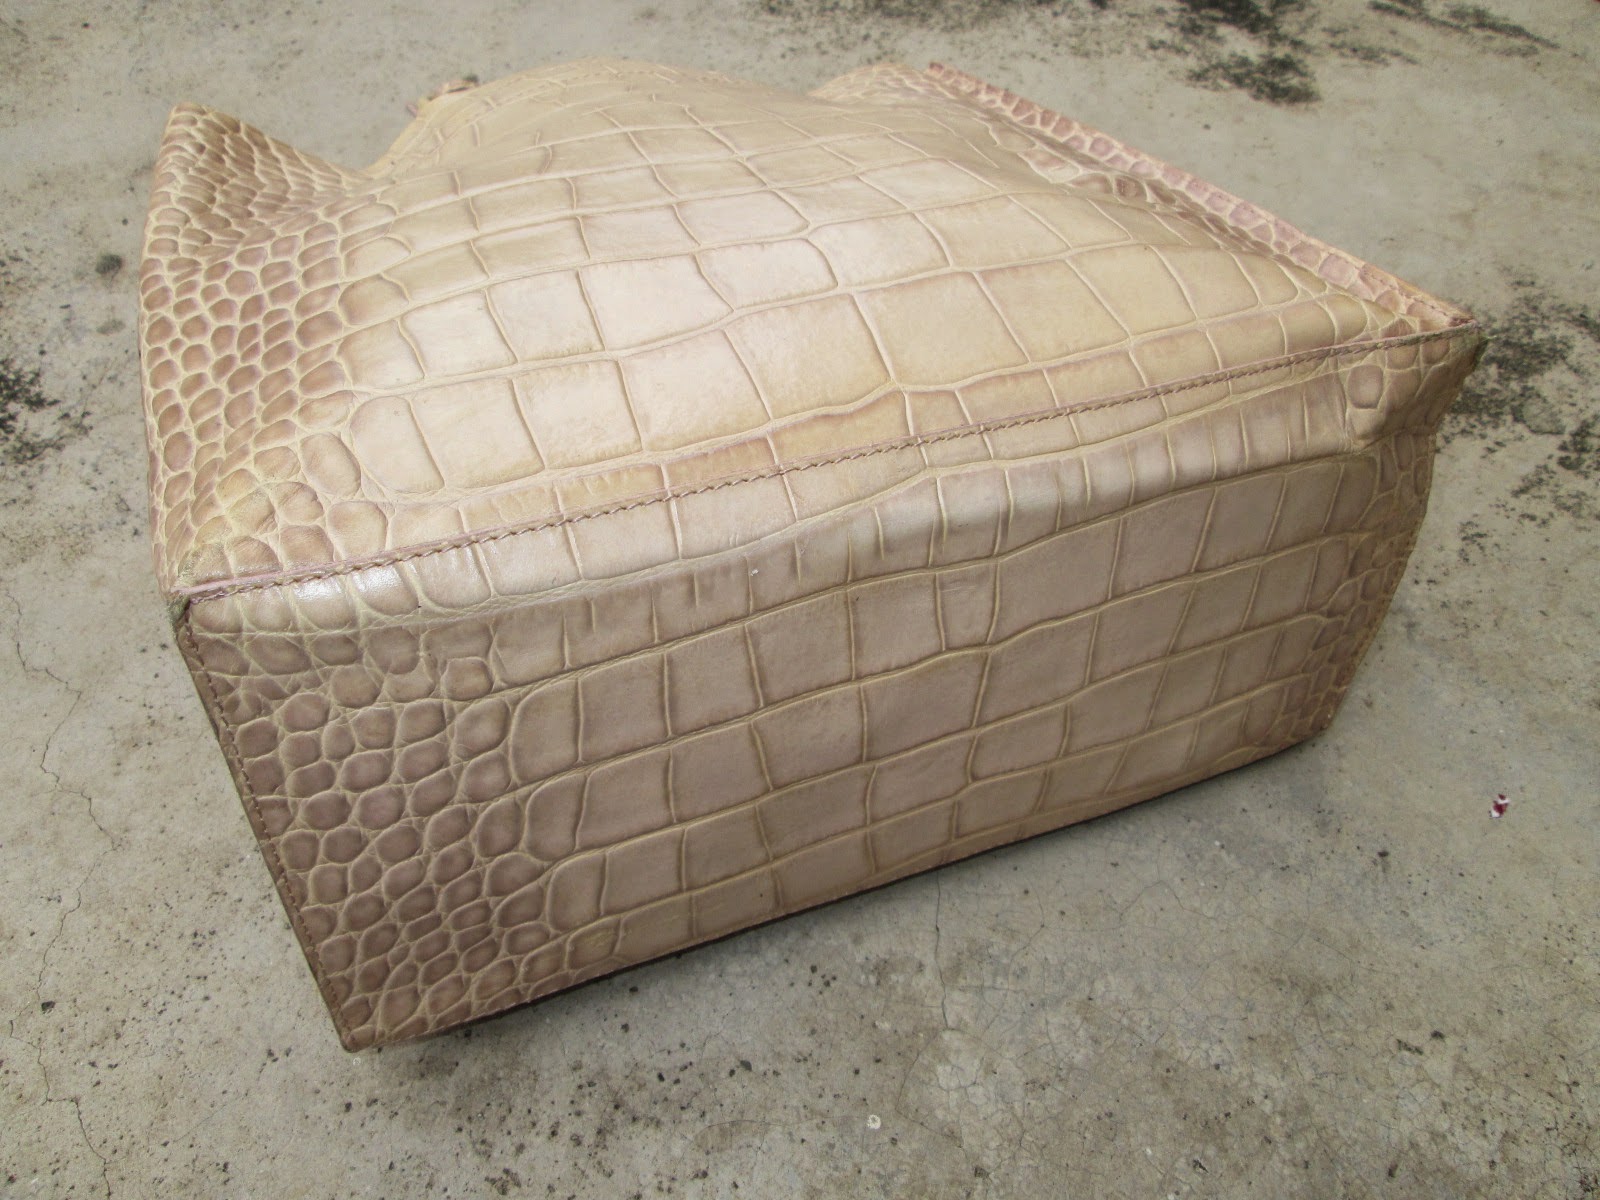 d0rayakEEbaG: Authentic FURLA Croc Leather Tote/Handbag(SOLD)